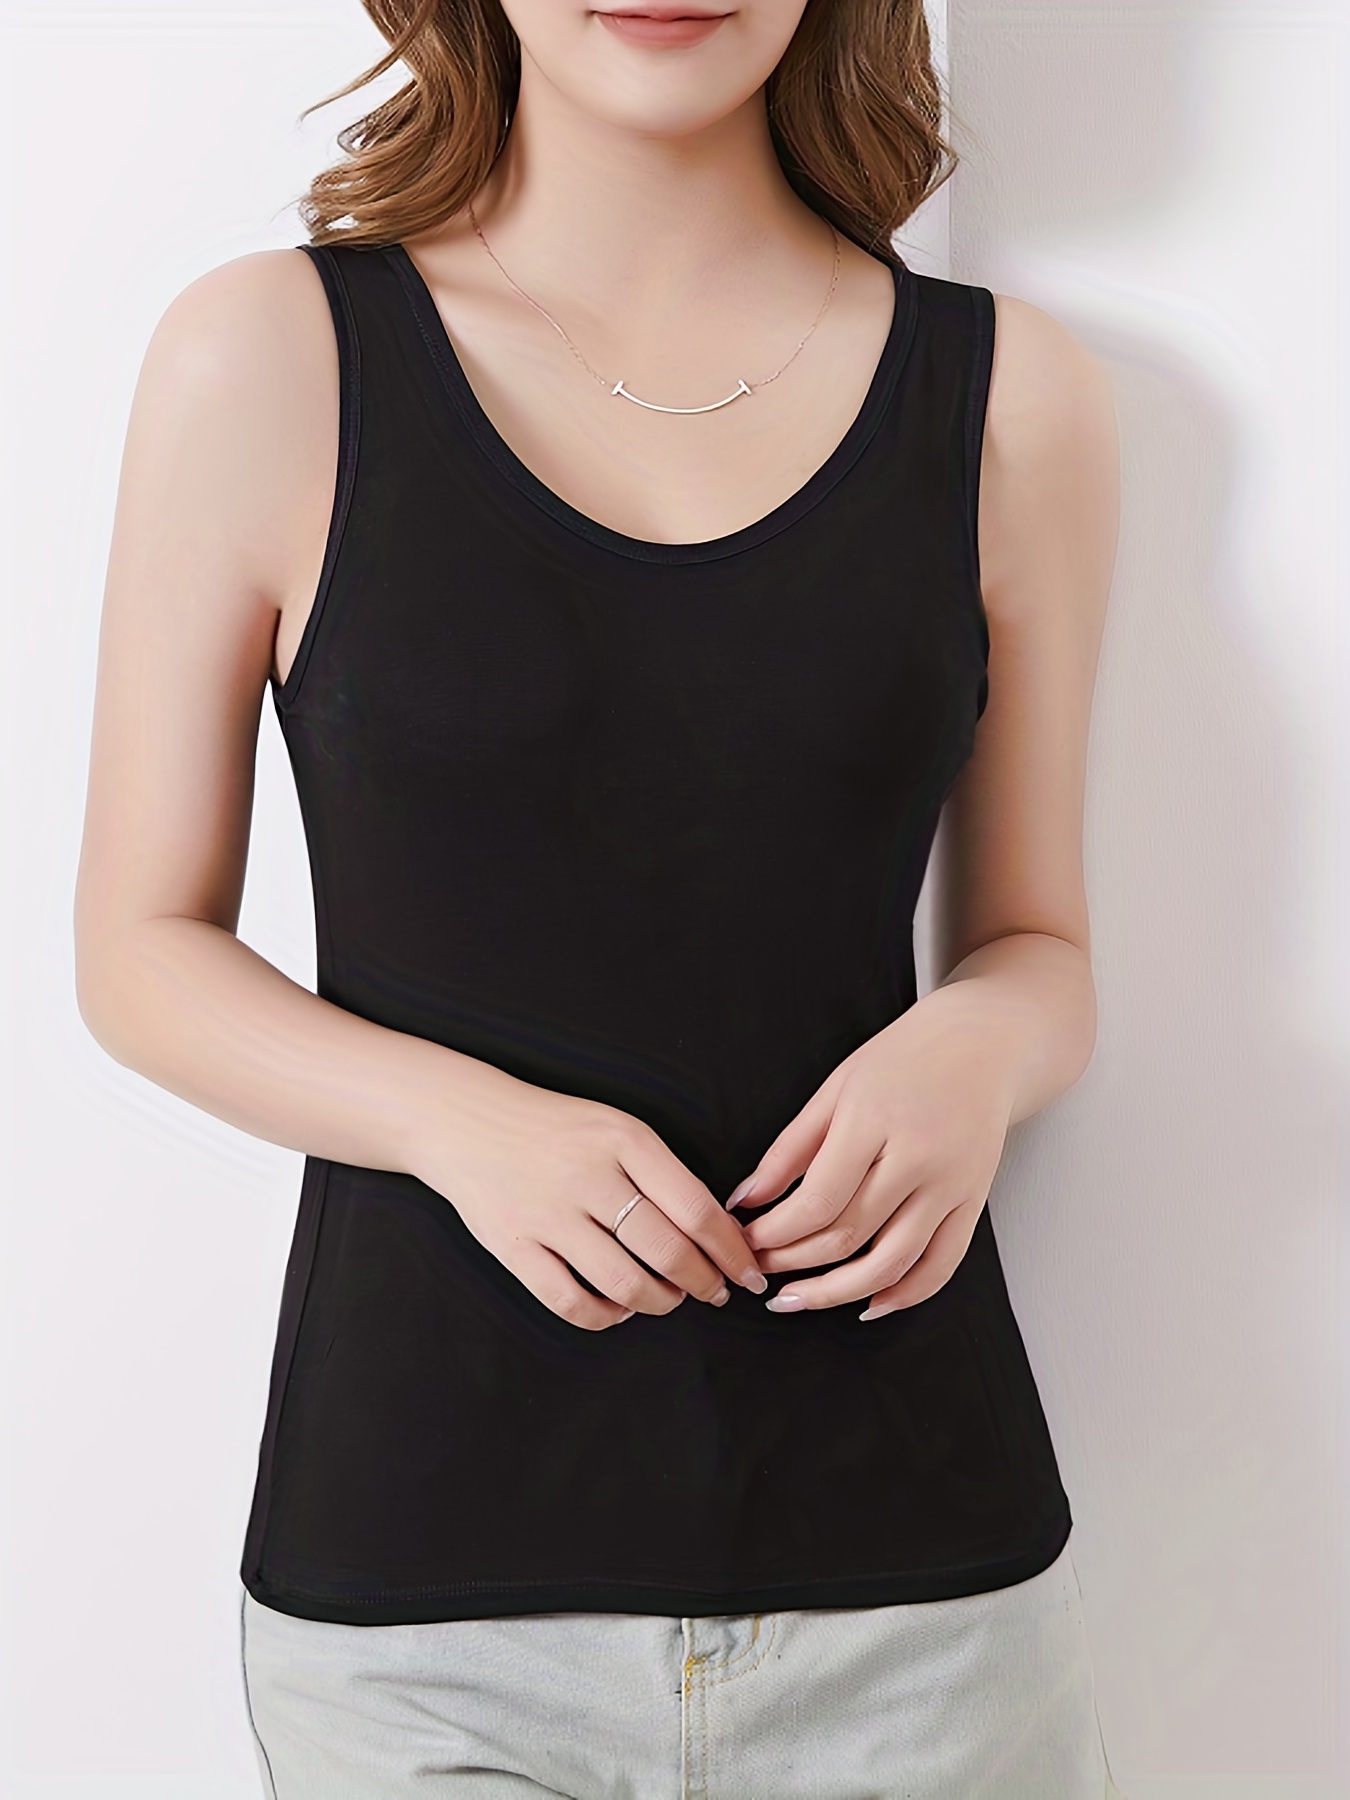 Women's Black Padded Camisole Tank Top For Inner Wear